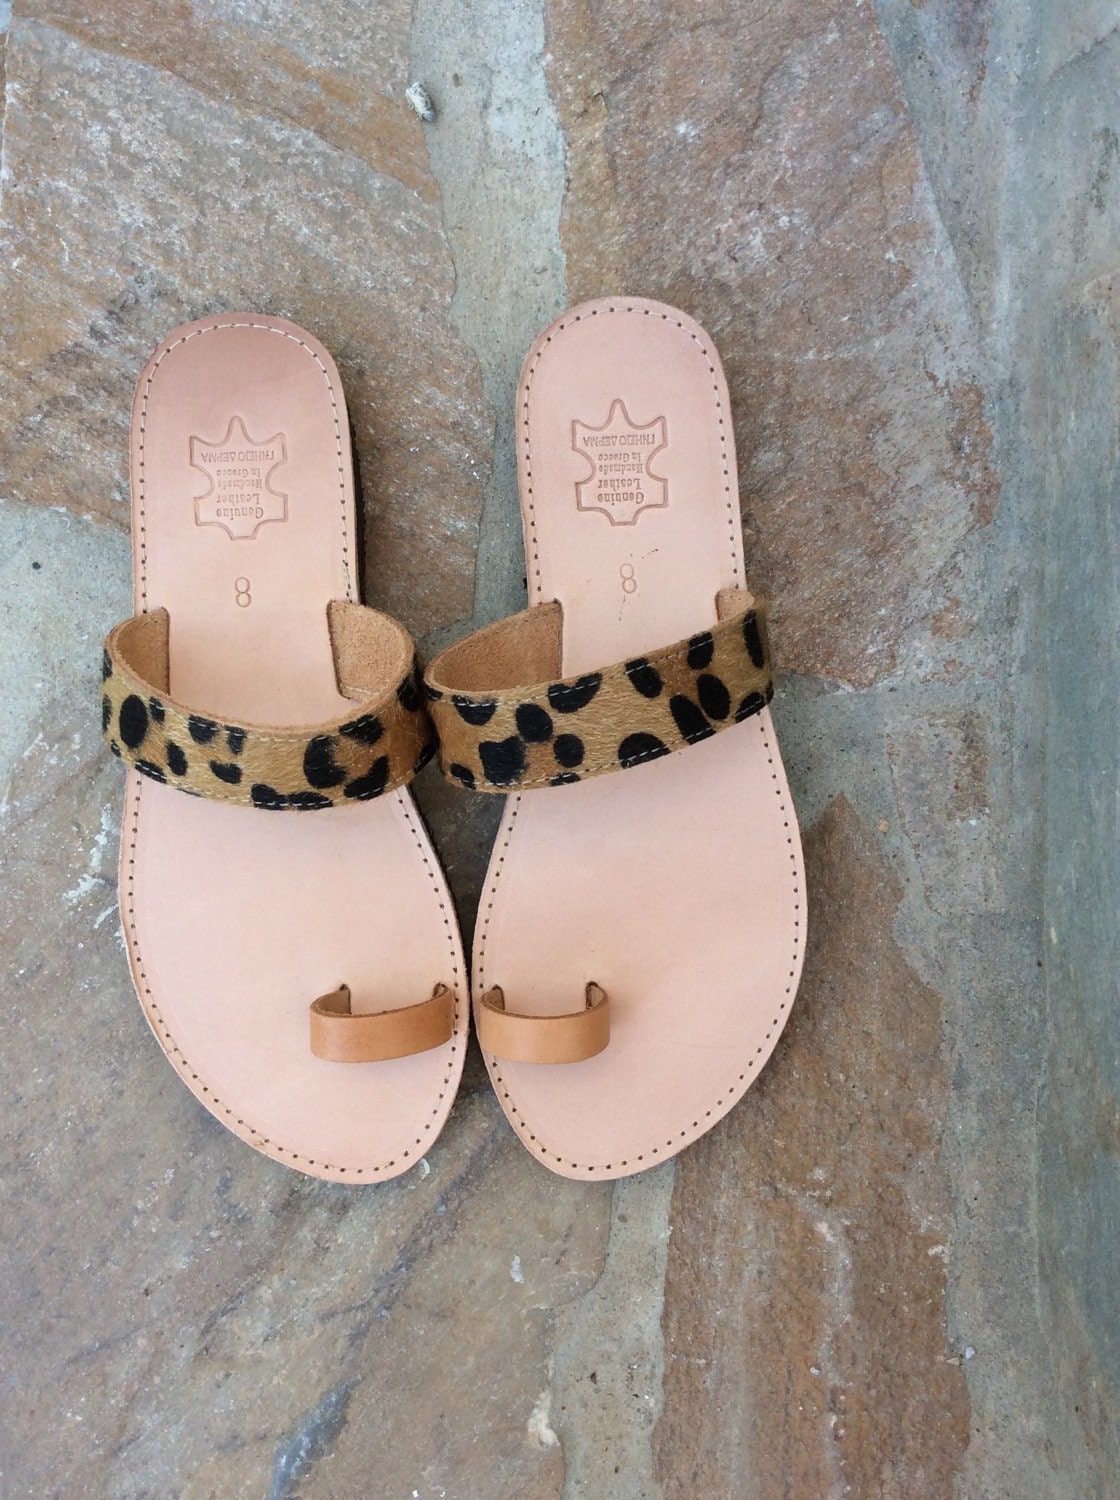 Pony Skin Sandals Greek sandals in Leopard pony skin leather